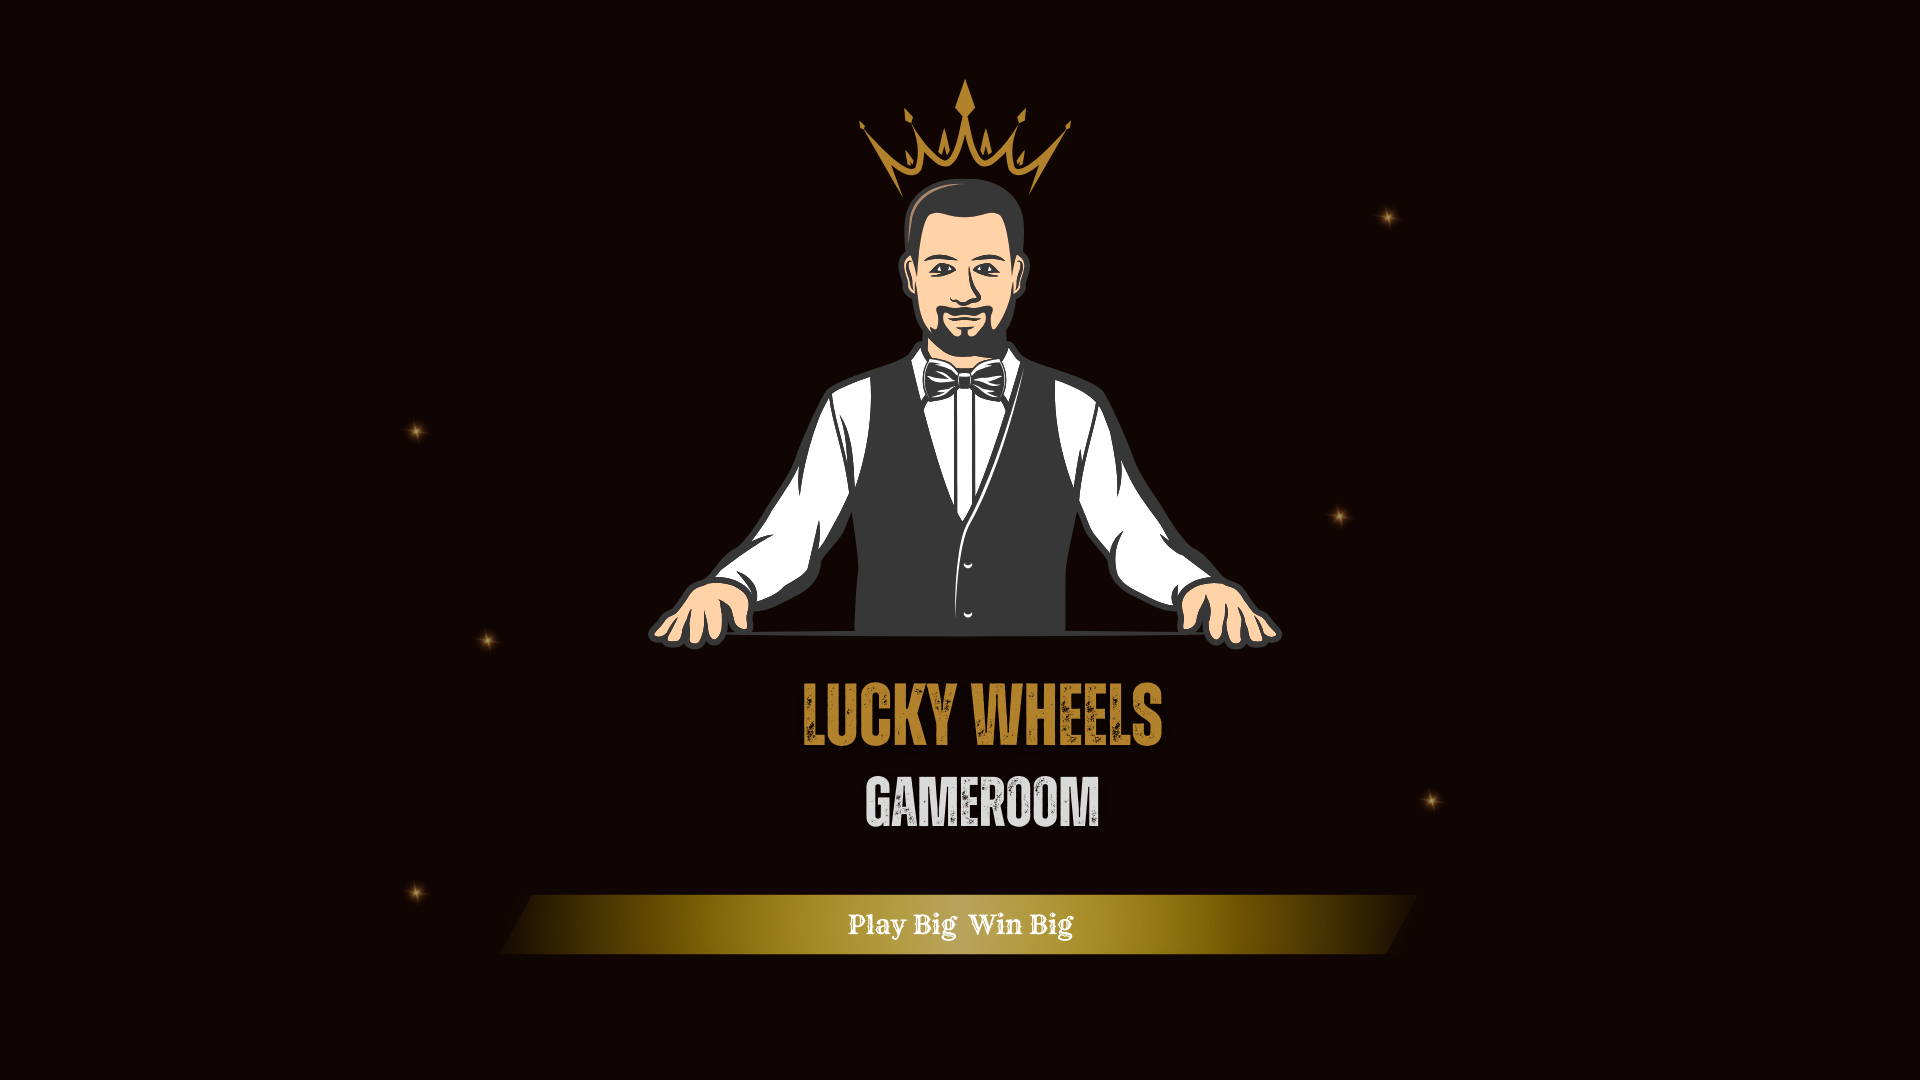 Lucky wheels gameroom